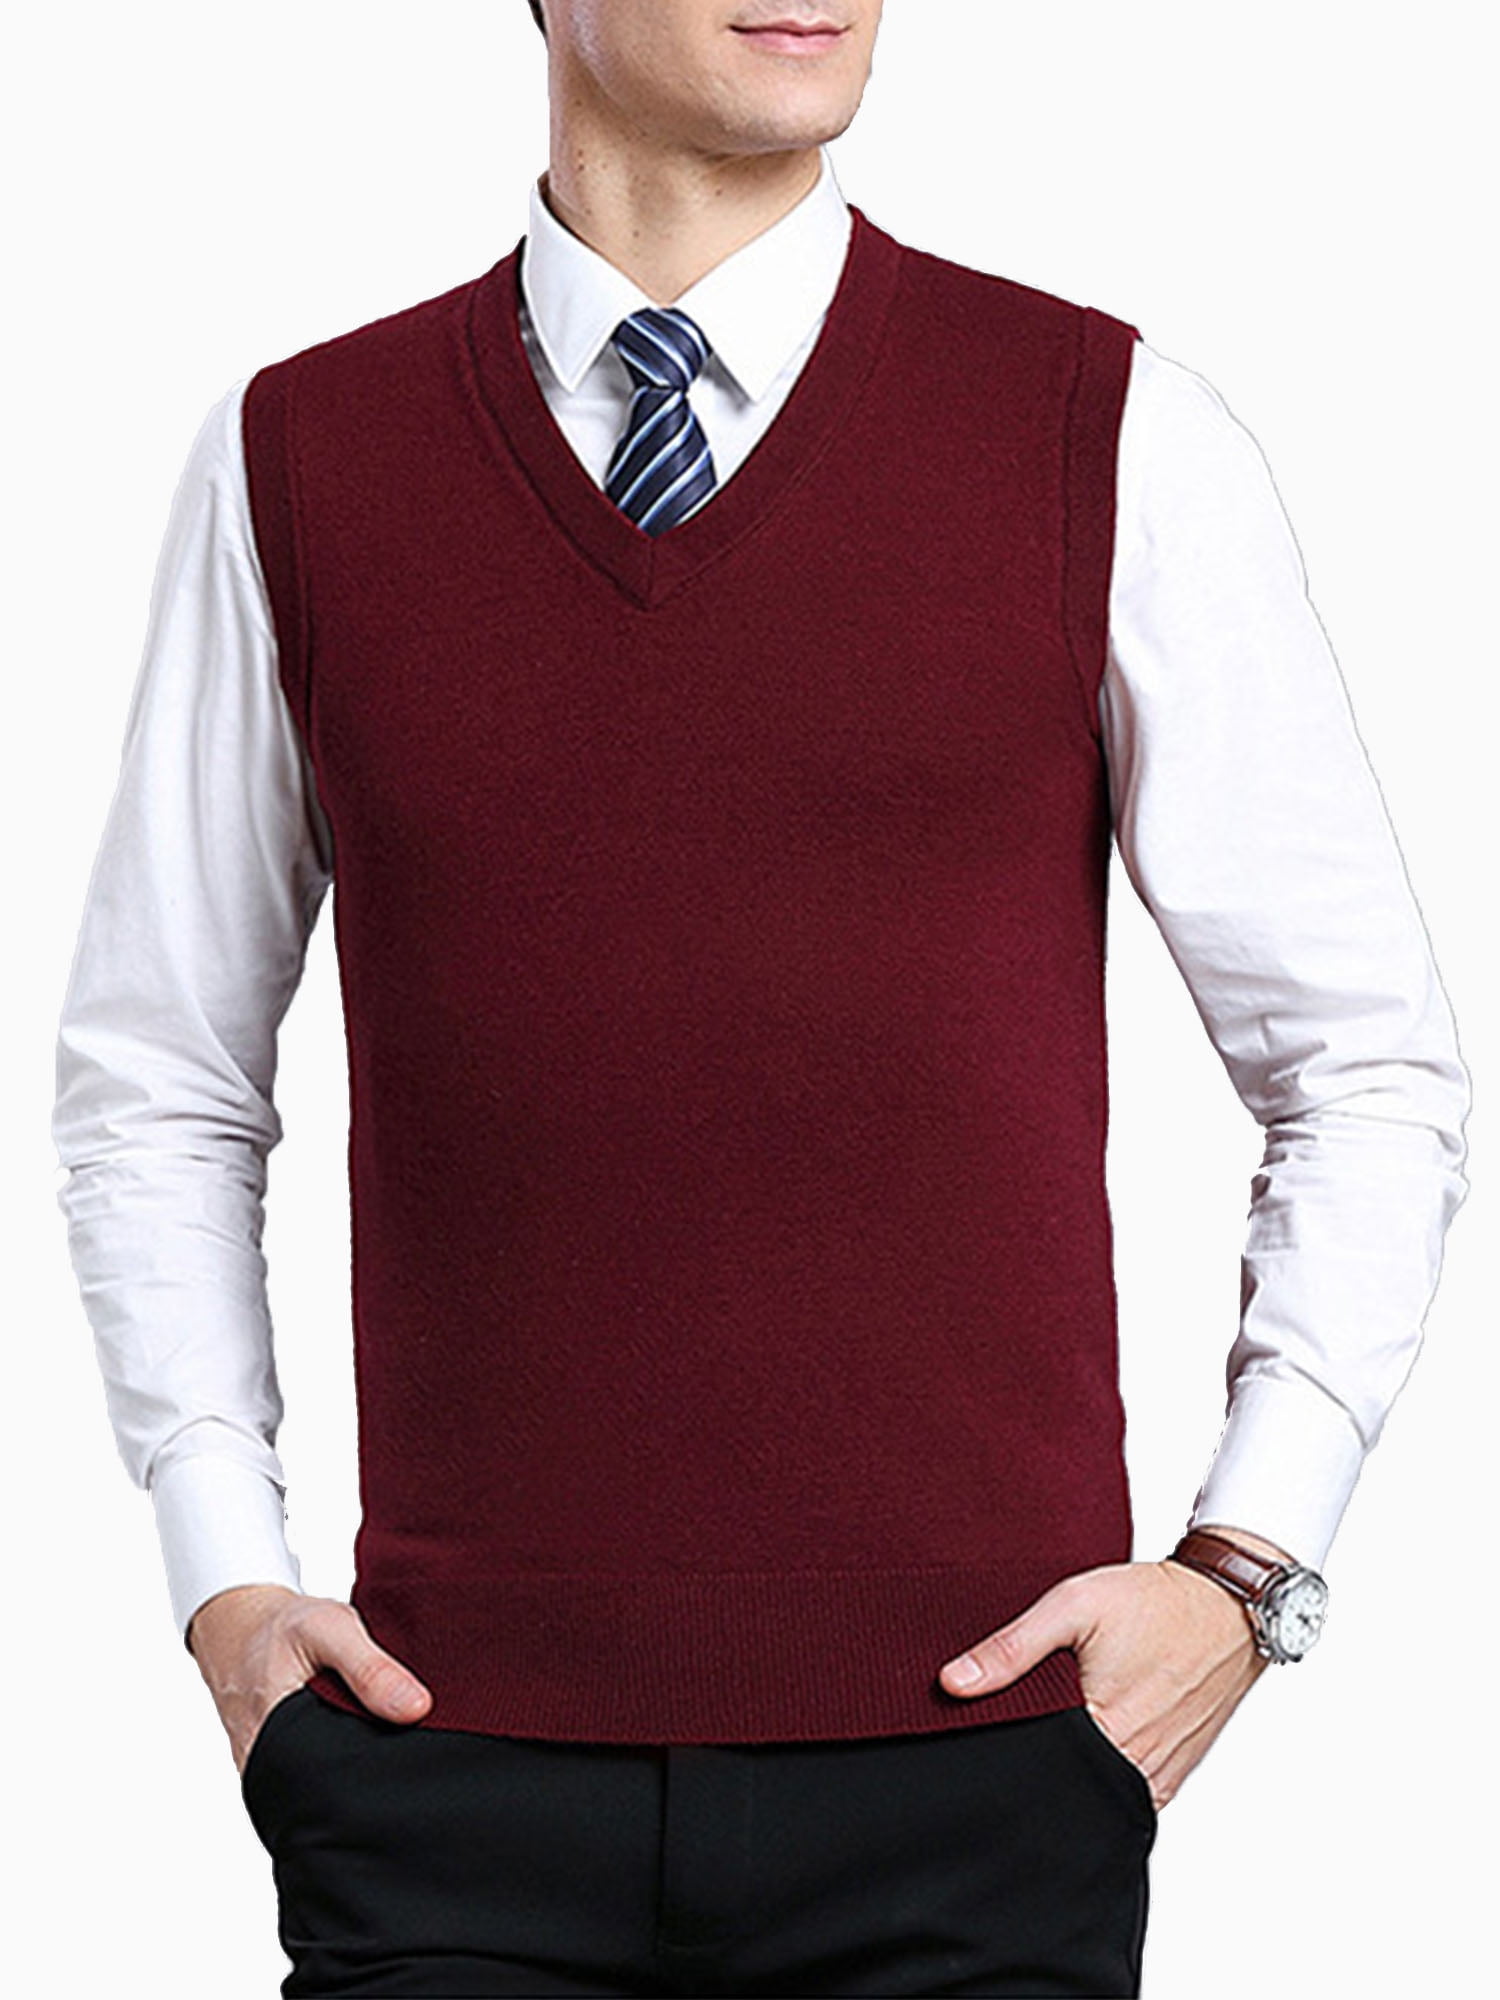 Men's Sweater Knitted Vest Warm Wool V-Neck Sleeveless Pullover Tops Shirt Gift 